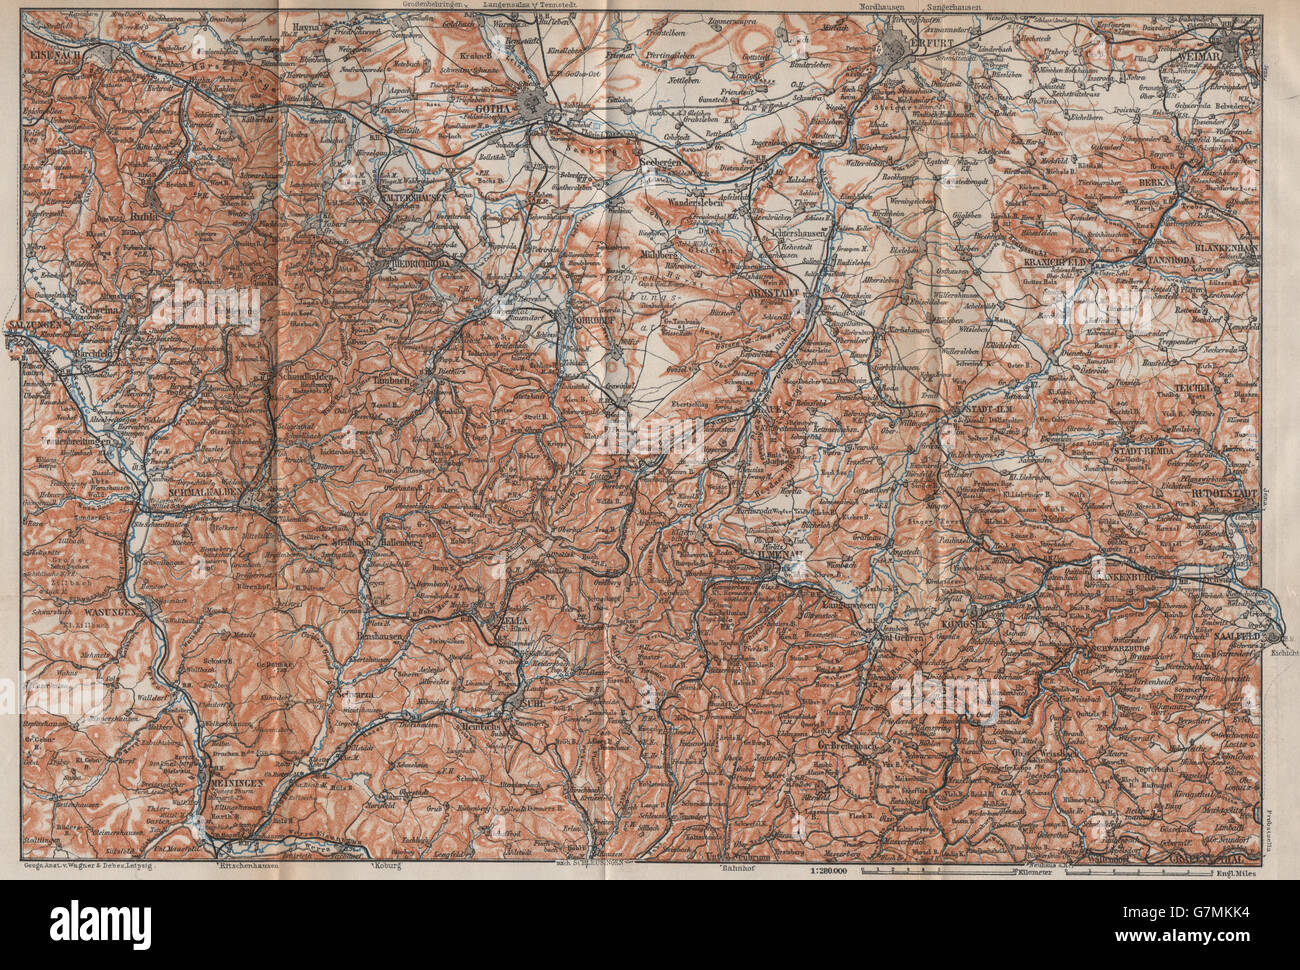 THÜRINGER WALD. Thuringian Forest. Gotha Eisenach Erfurt Weimar karte, 1913 map Stock Photo